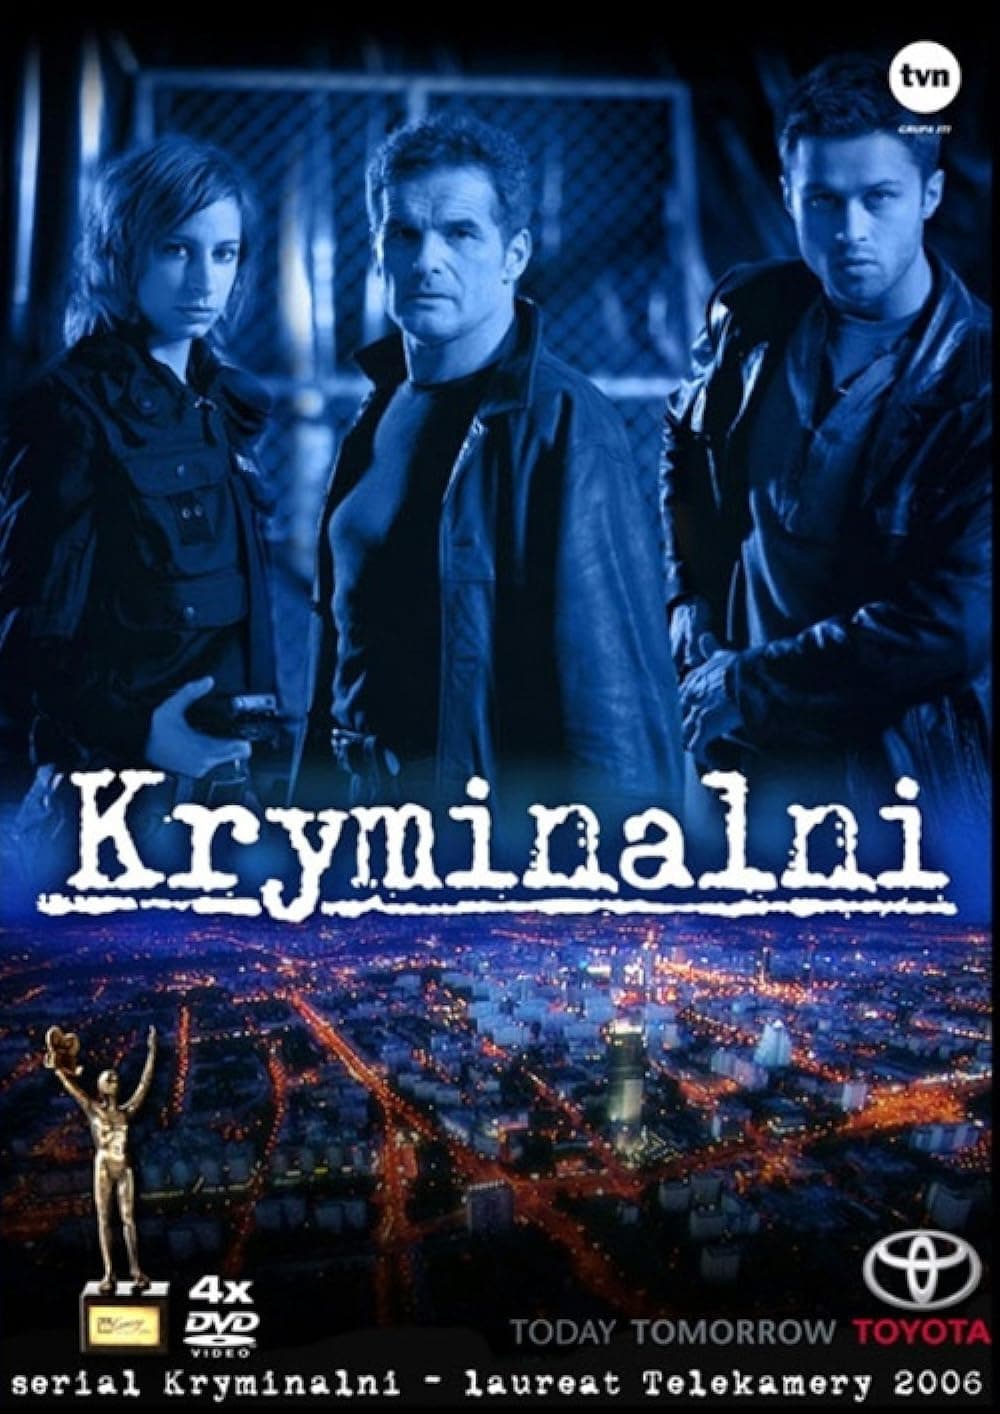 Kryminalni (2004)